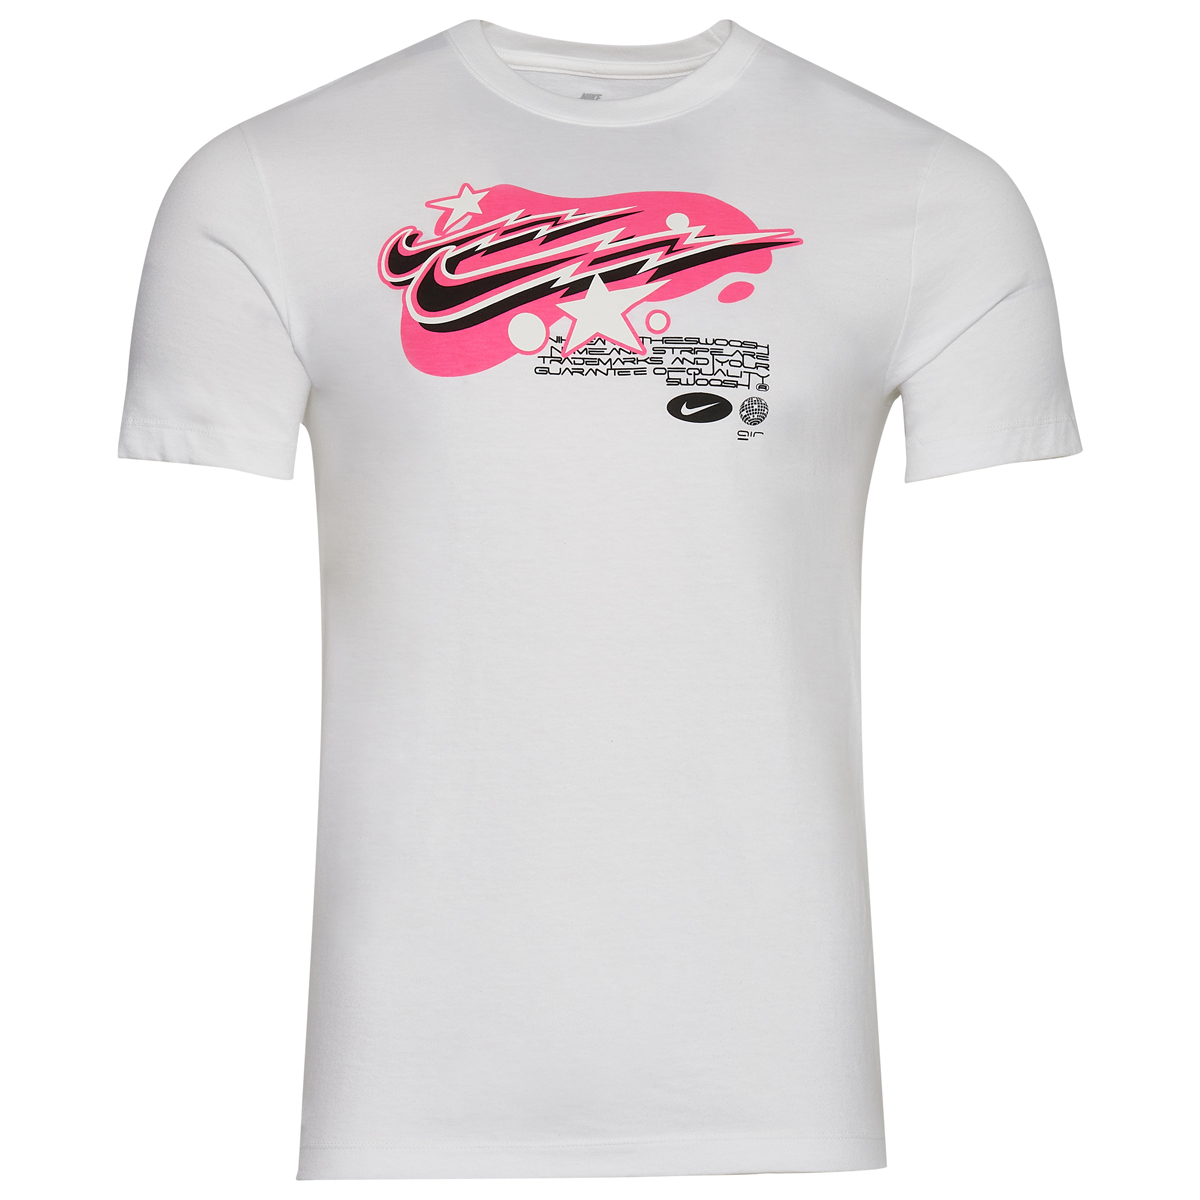 Nike-Electric-High-T-Shirt-White-Pink